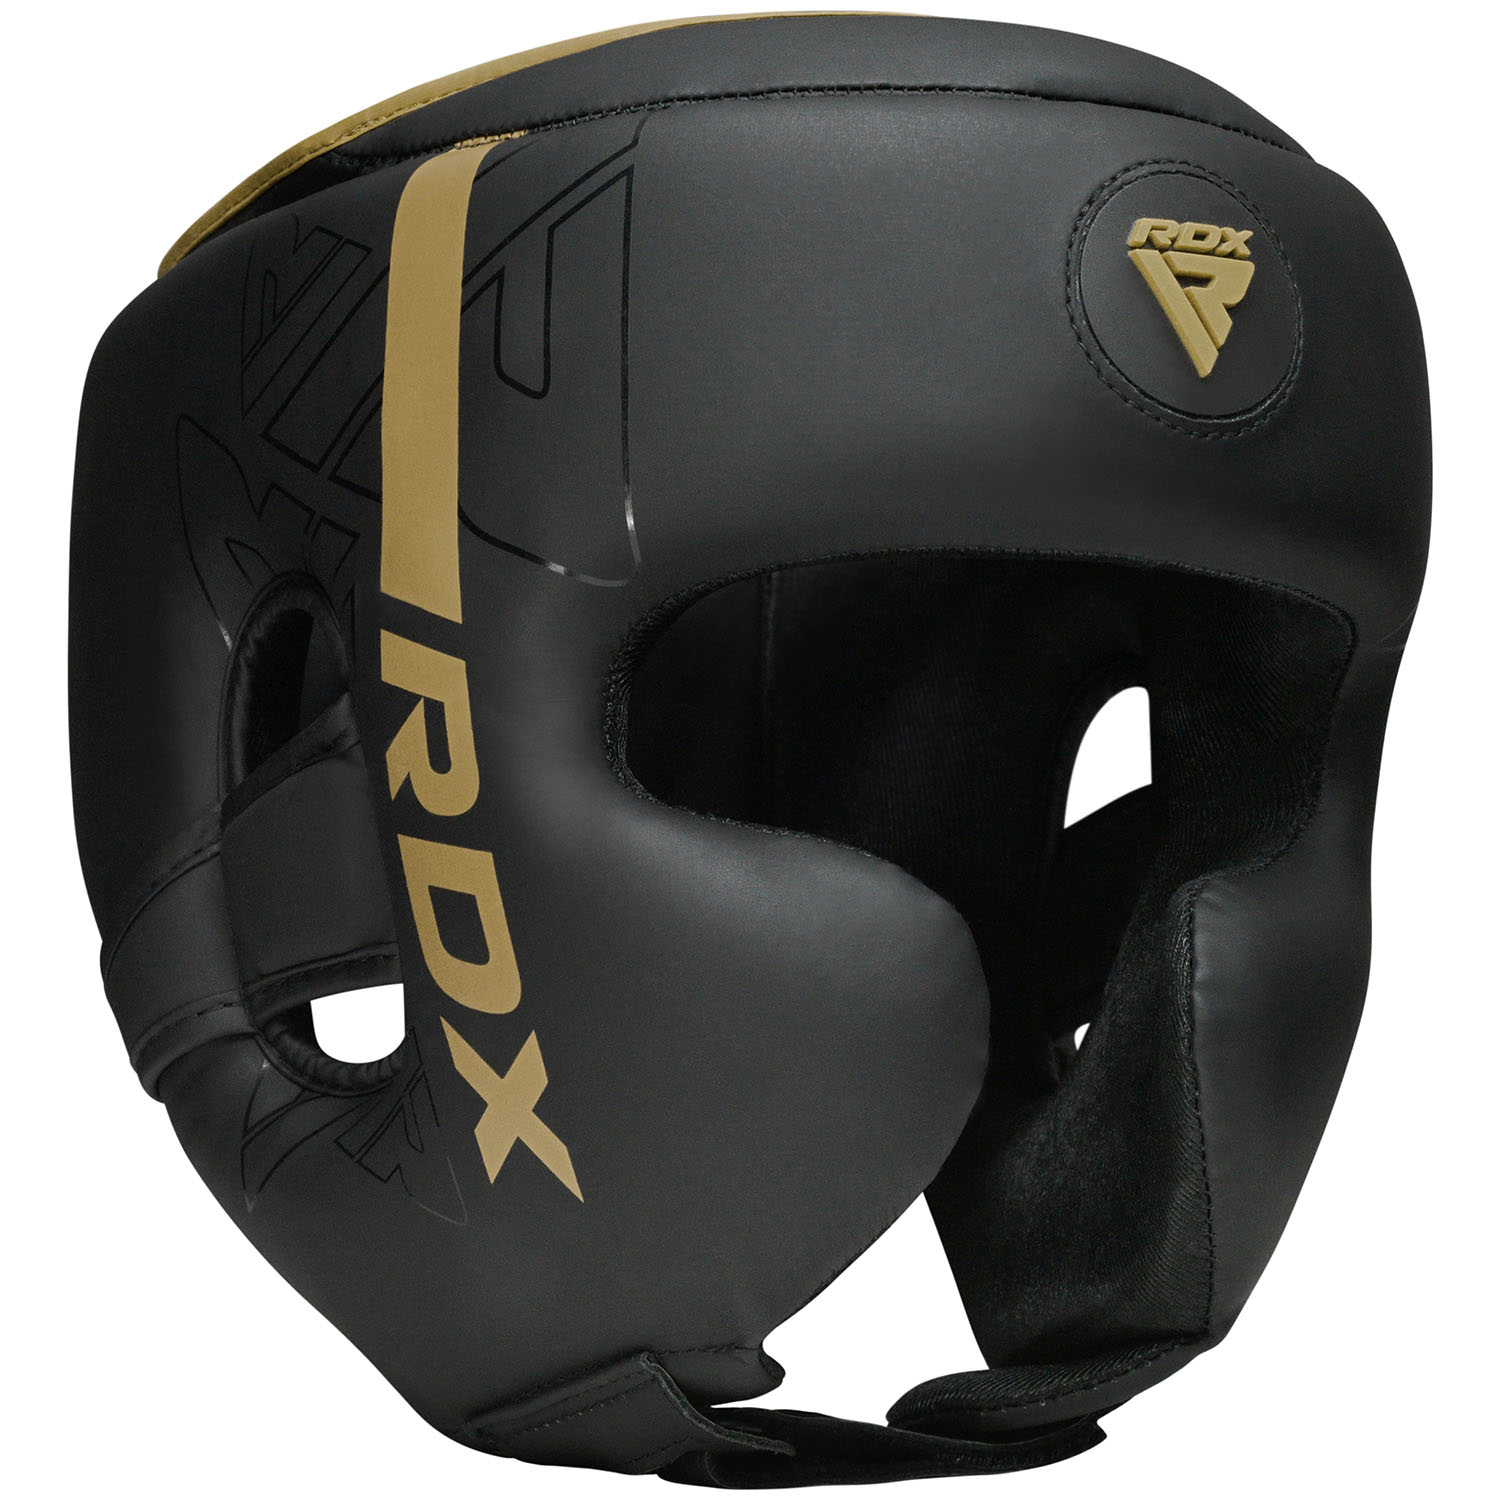 RDX Kopfschutz, Kara Series F6, schwarz-gold, XL